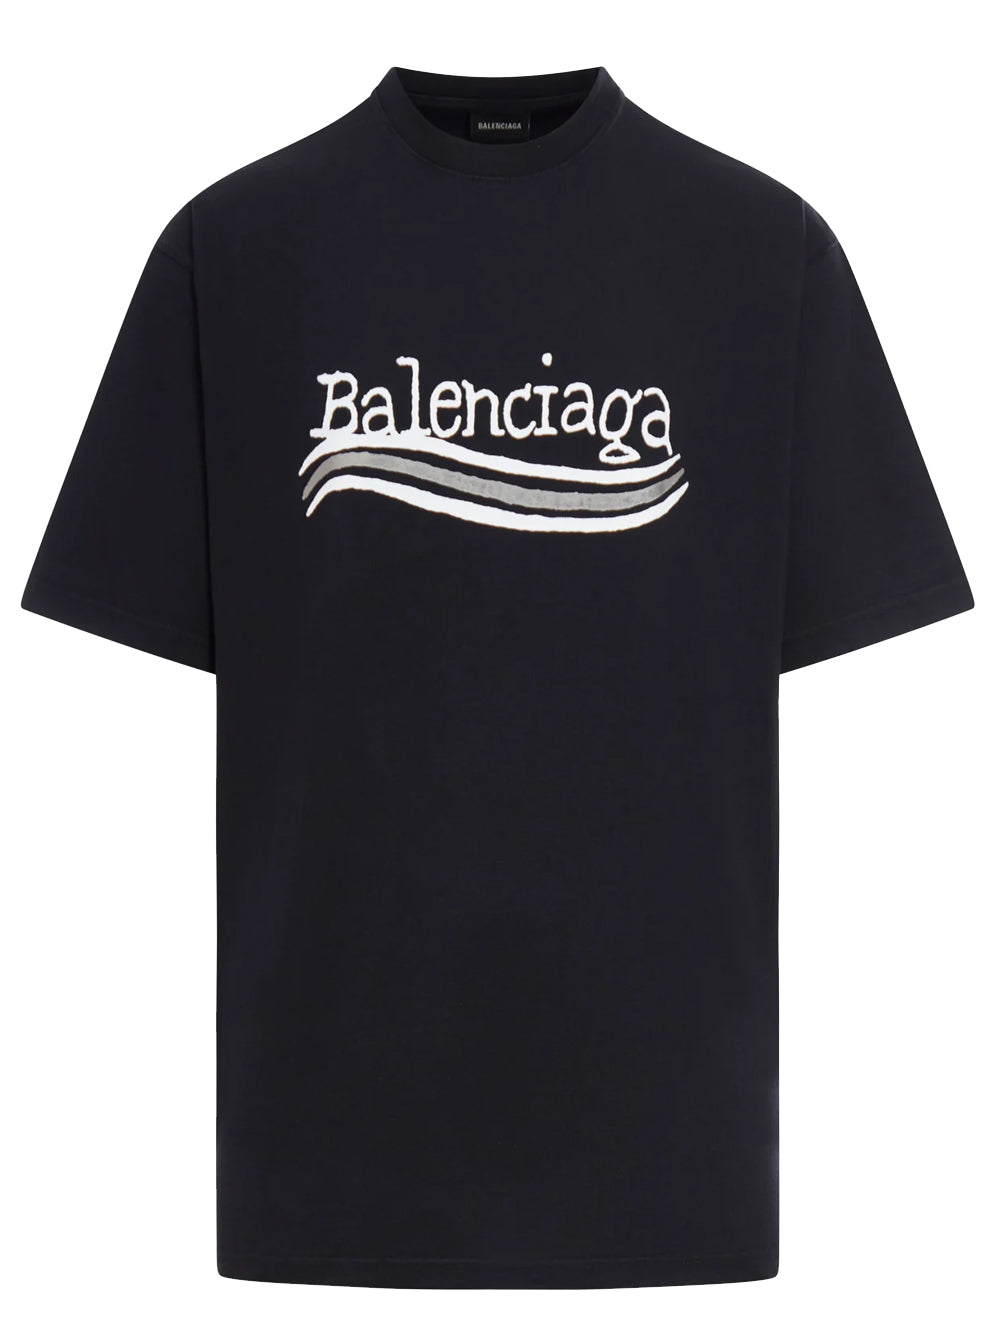 BALENCIAGA Large Fit Cotton Blend Logo T-Shirt Black/Silver/White - MAISONDEFASHION.COM